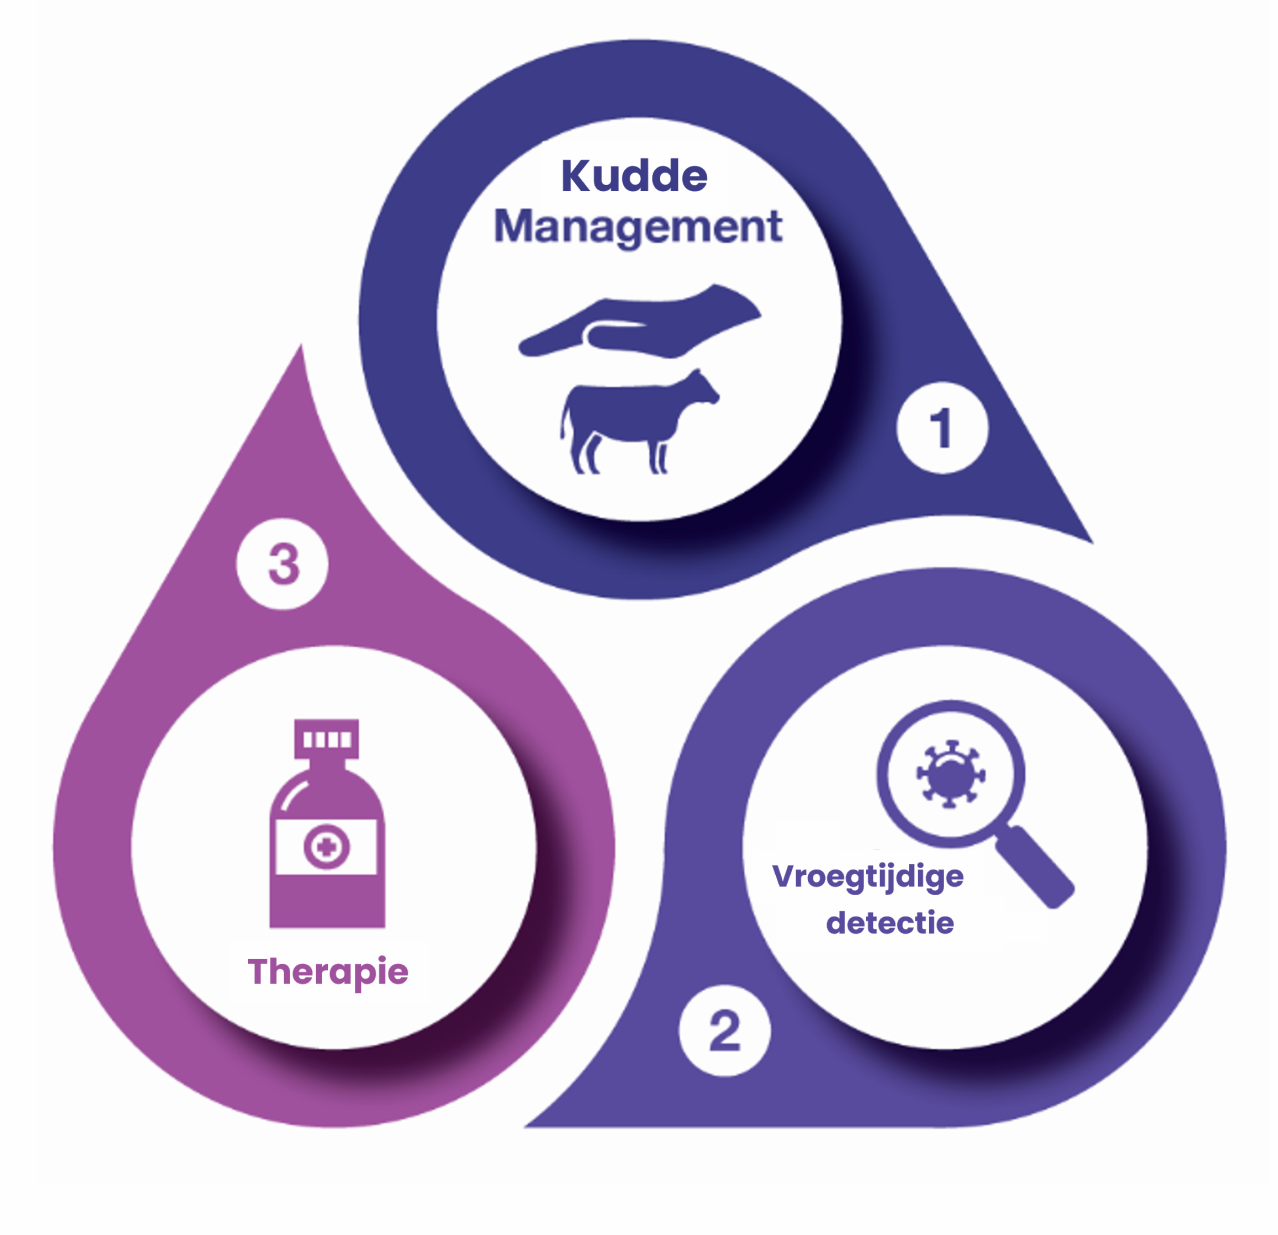 Internal medicines in Cattle - Dechra's integrated approach